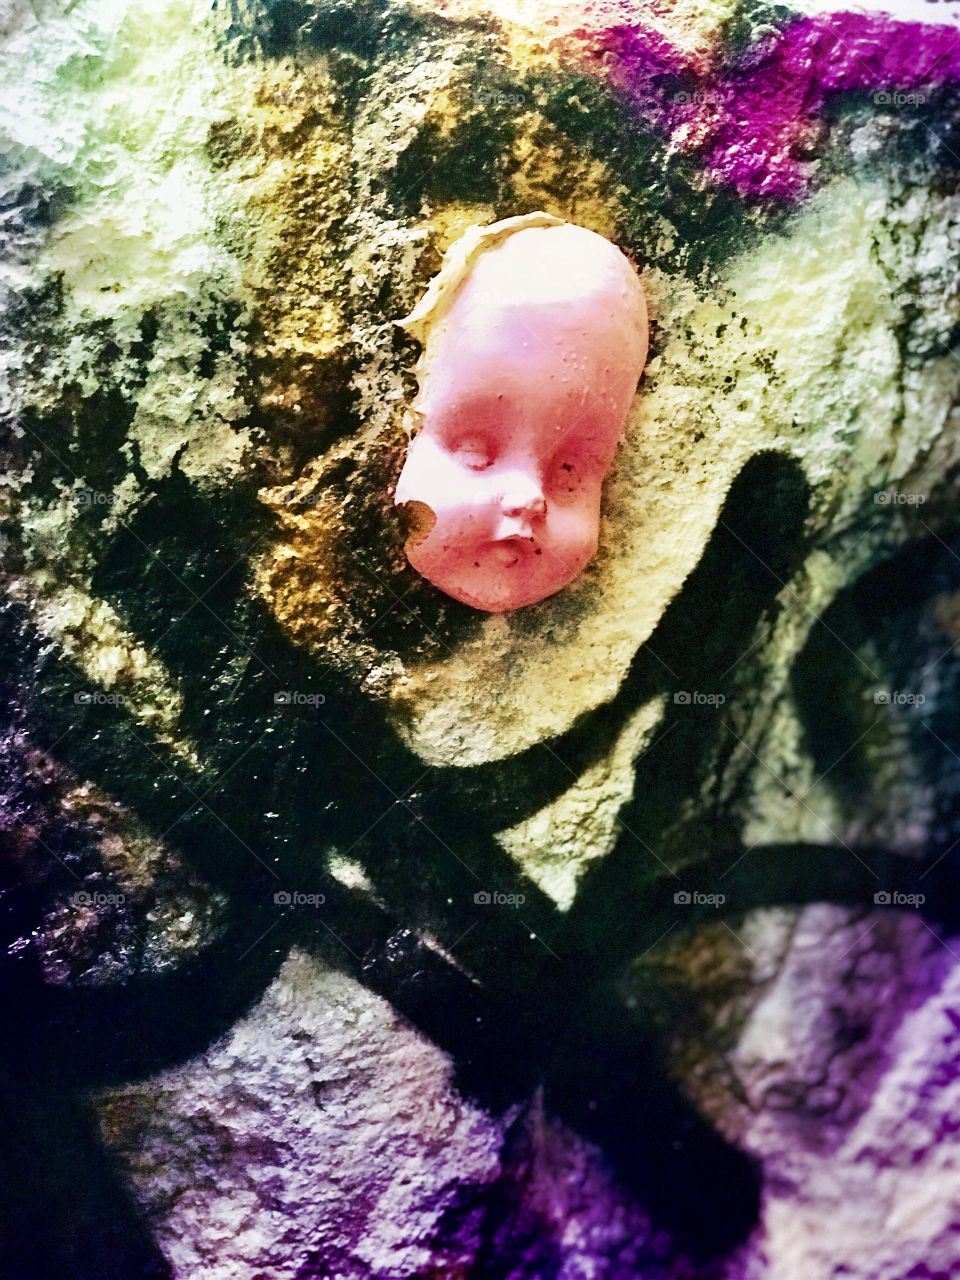 Creepy plastic doll head on a spray painted rock in SOHO, New York City 